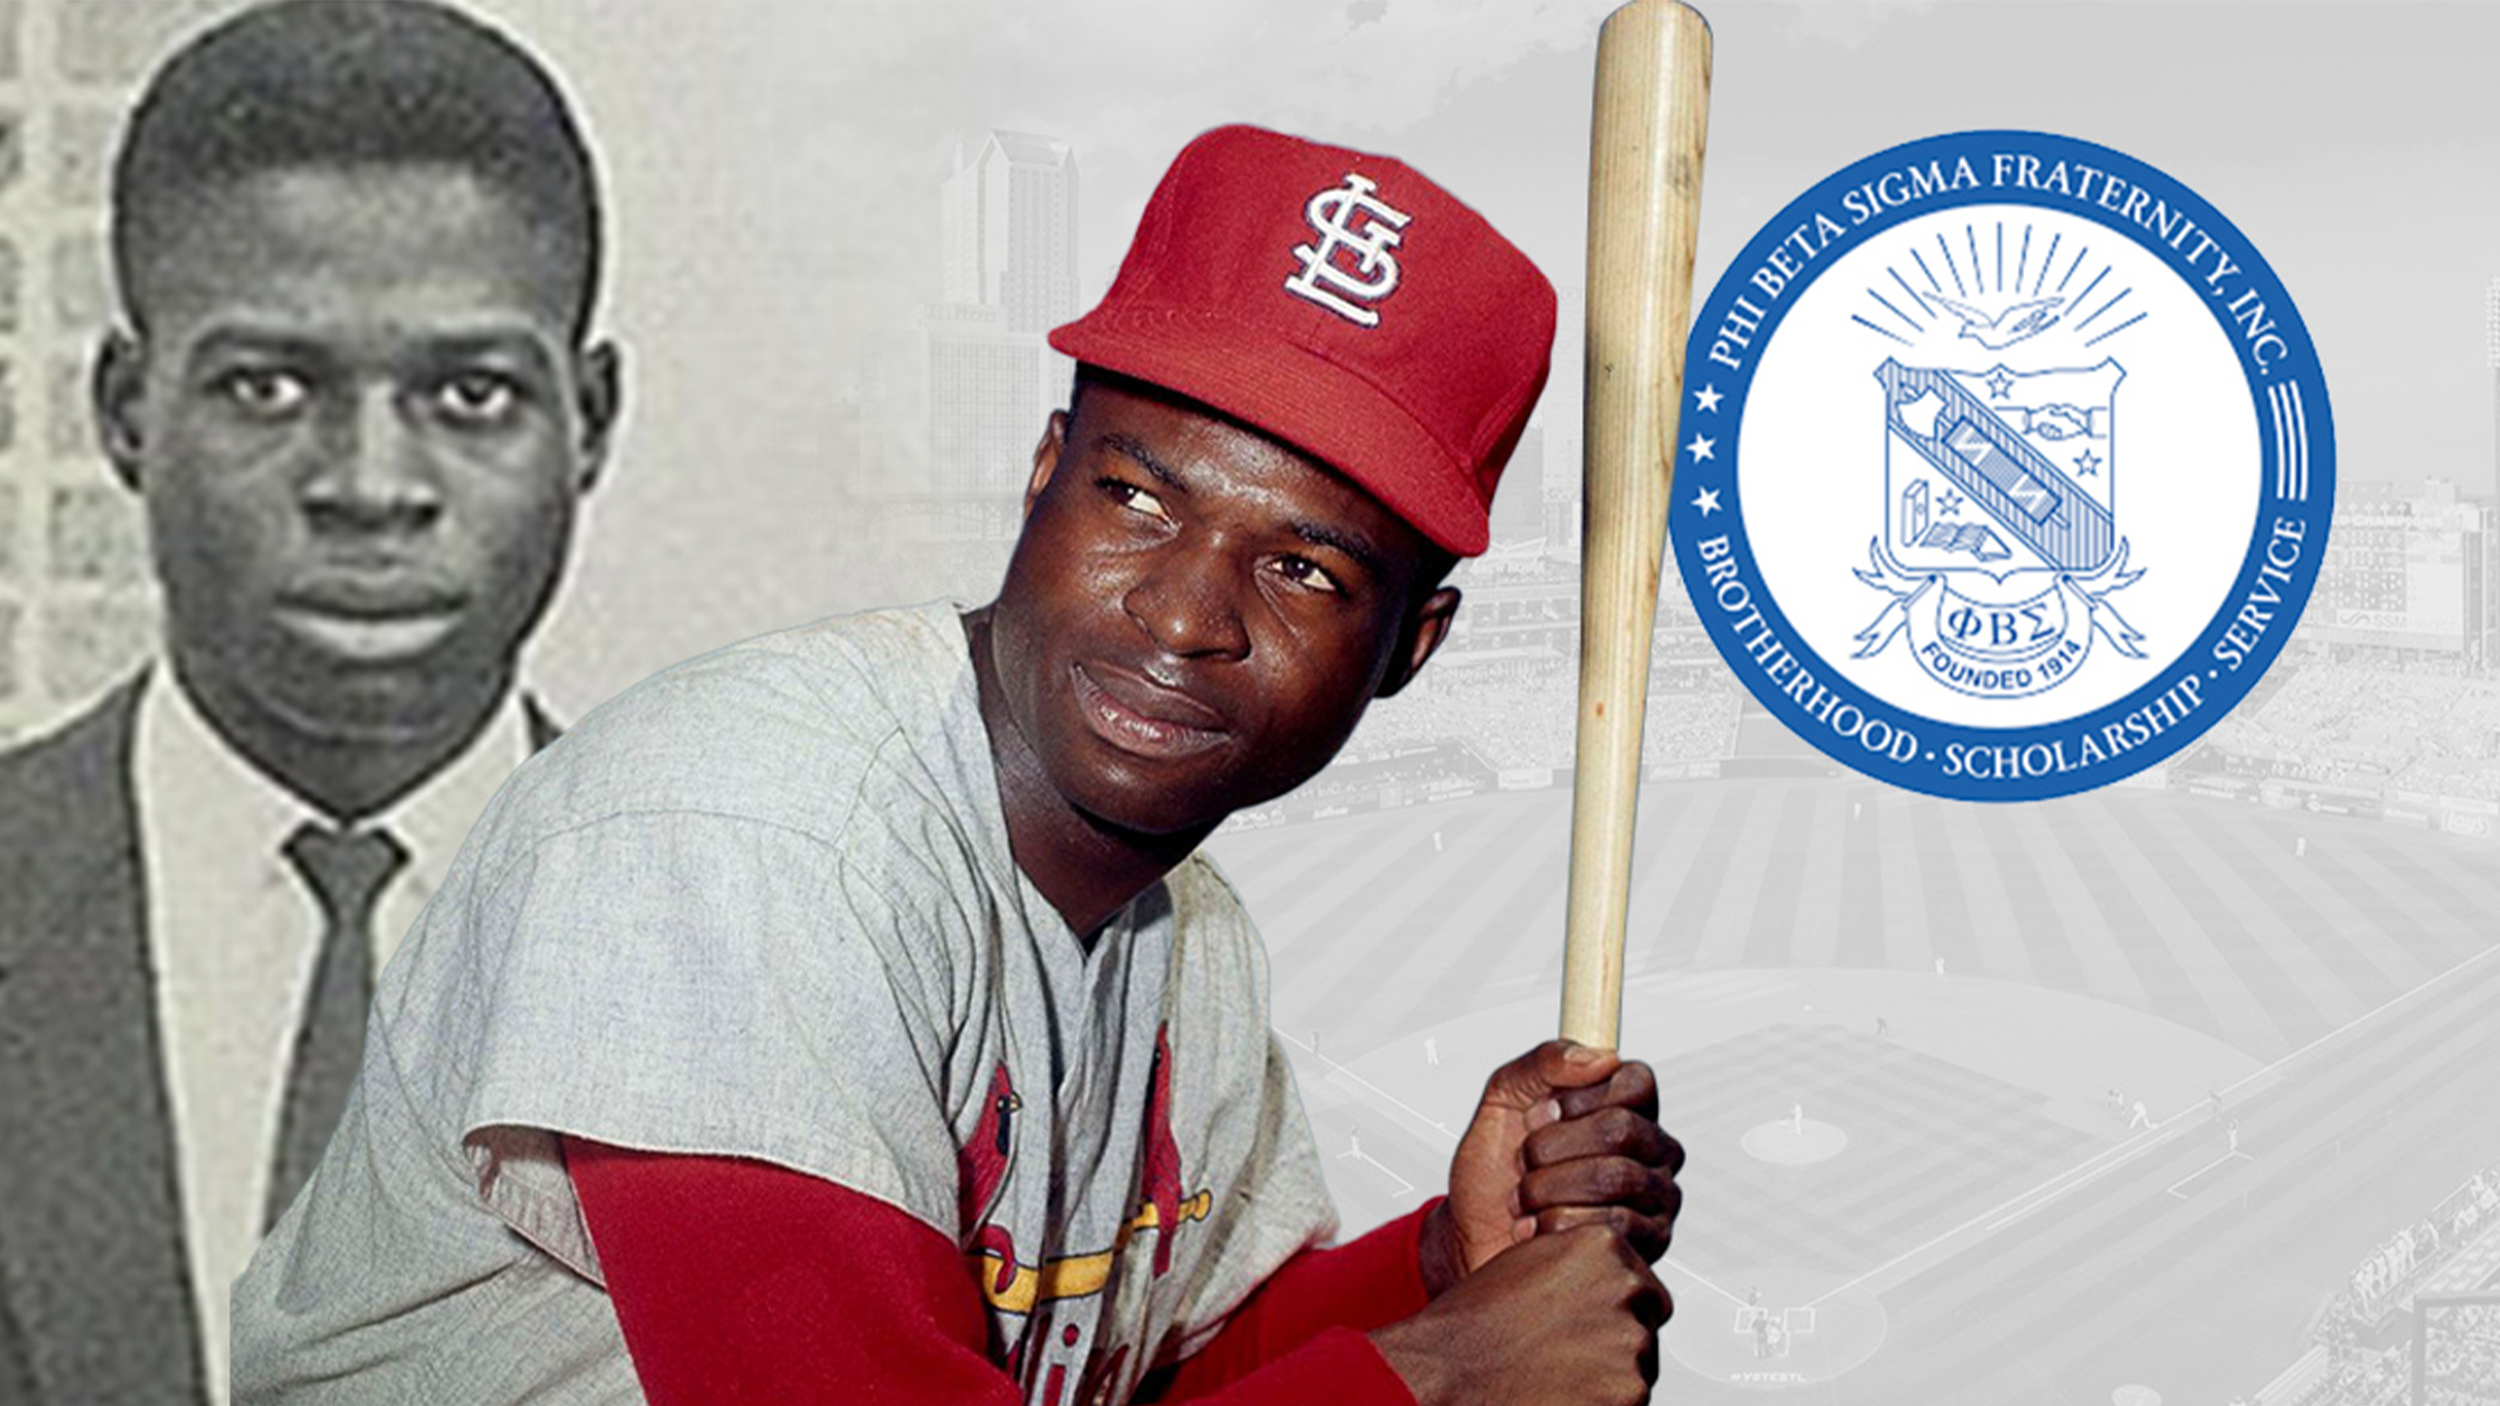 Hall of Fame Baseball Legend Lou Brock Was A Member of Phi Beta